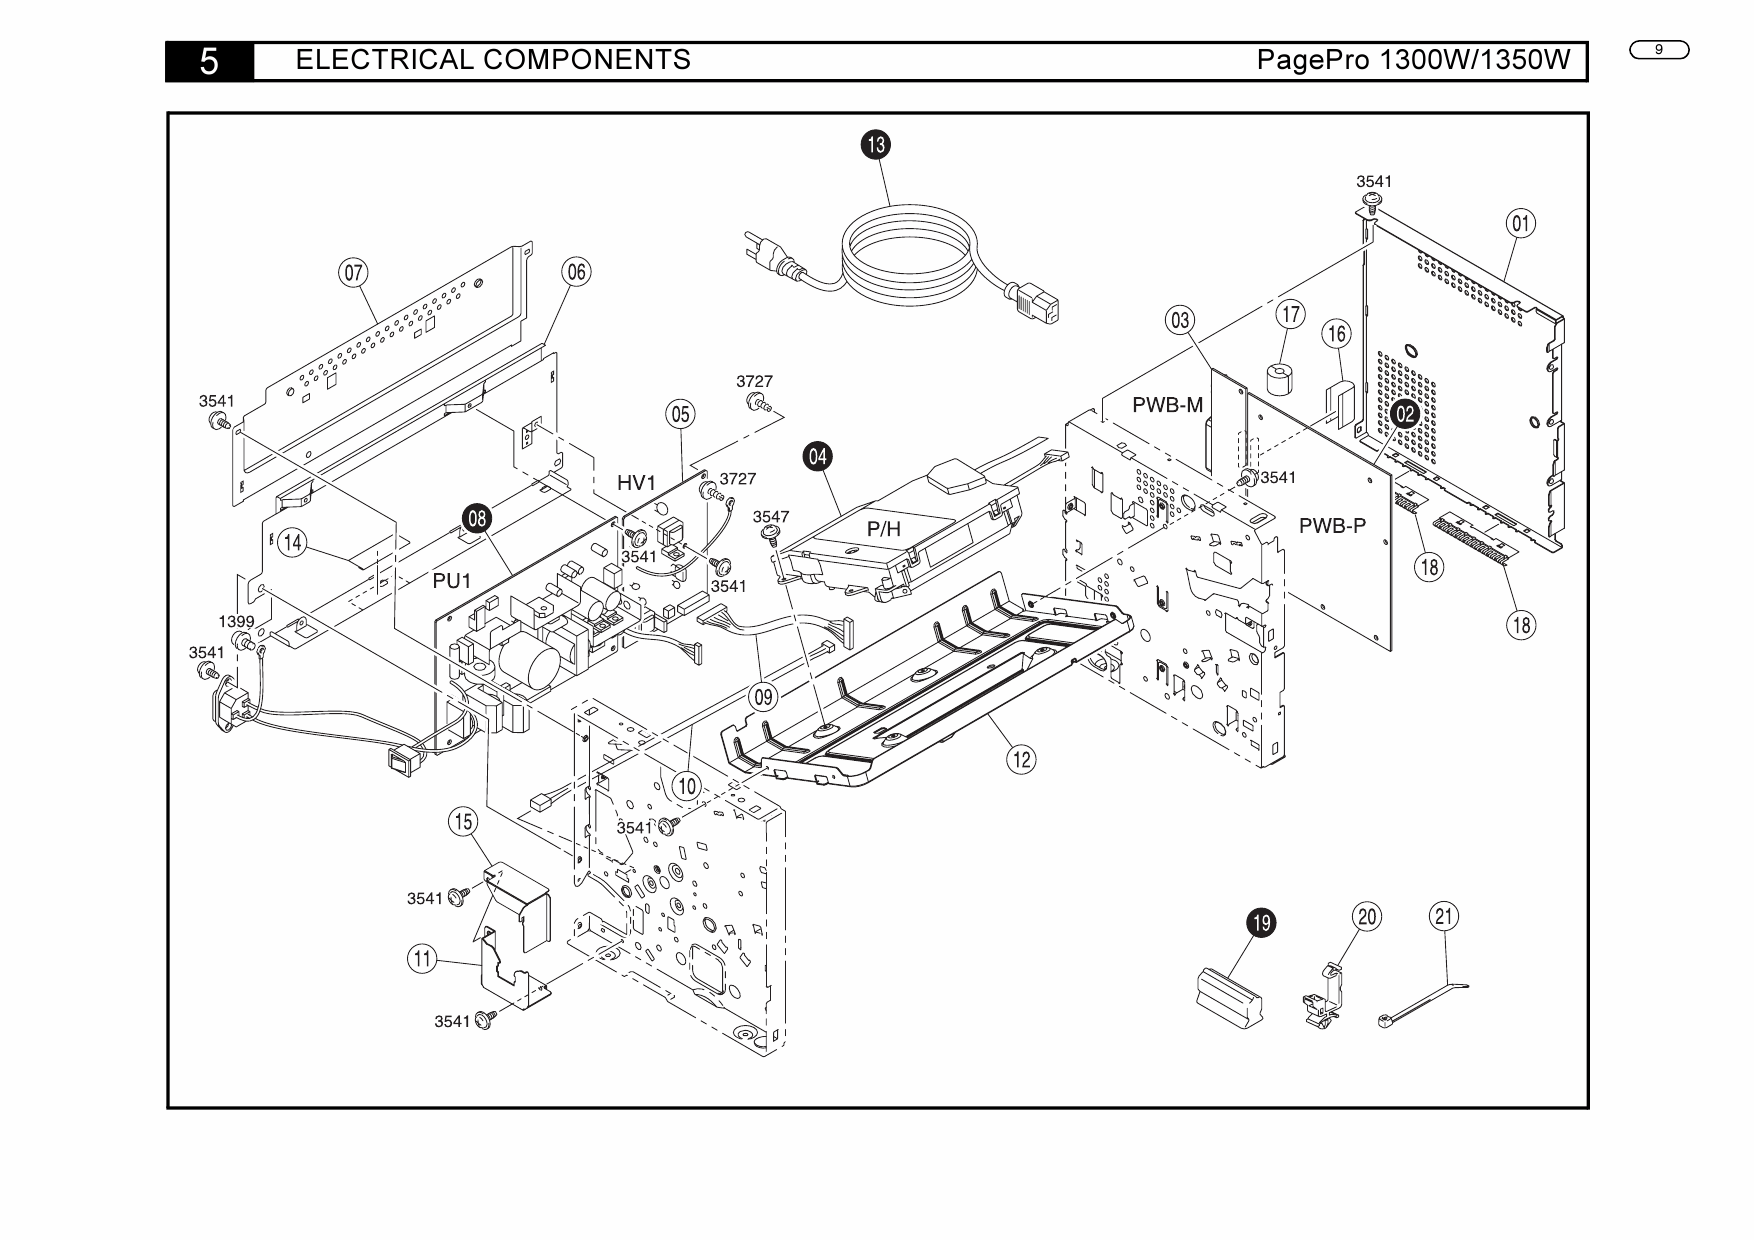 Konica-Minolta pagepro 1300W Parts Manual-6